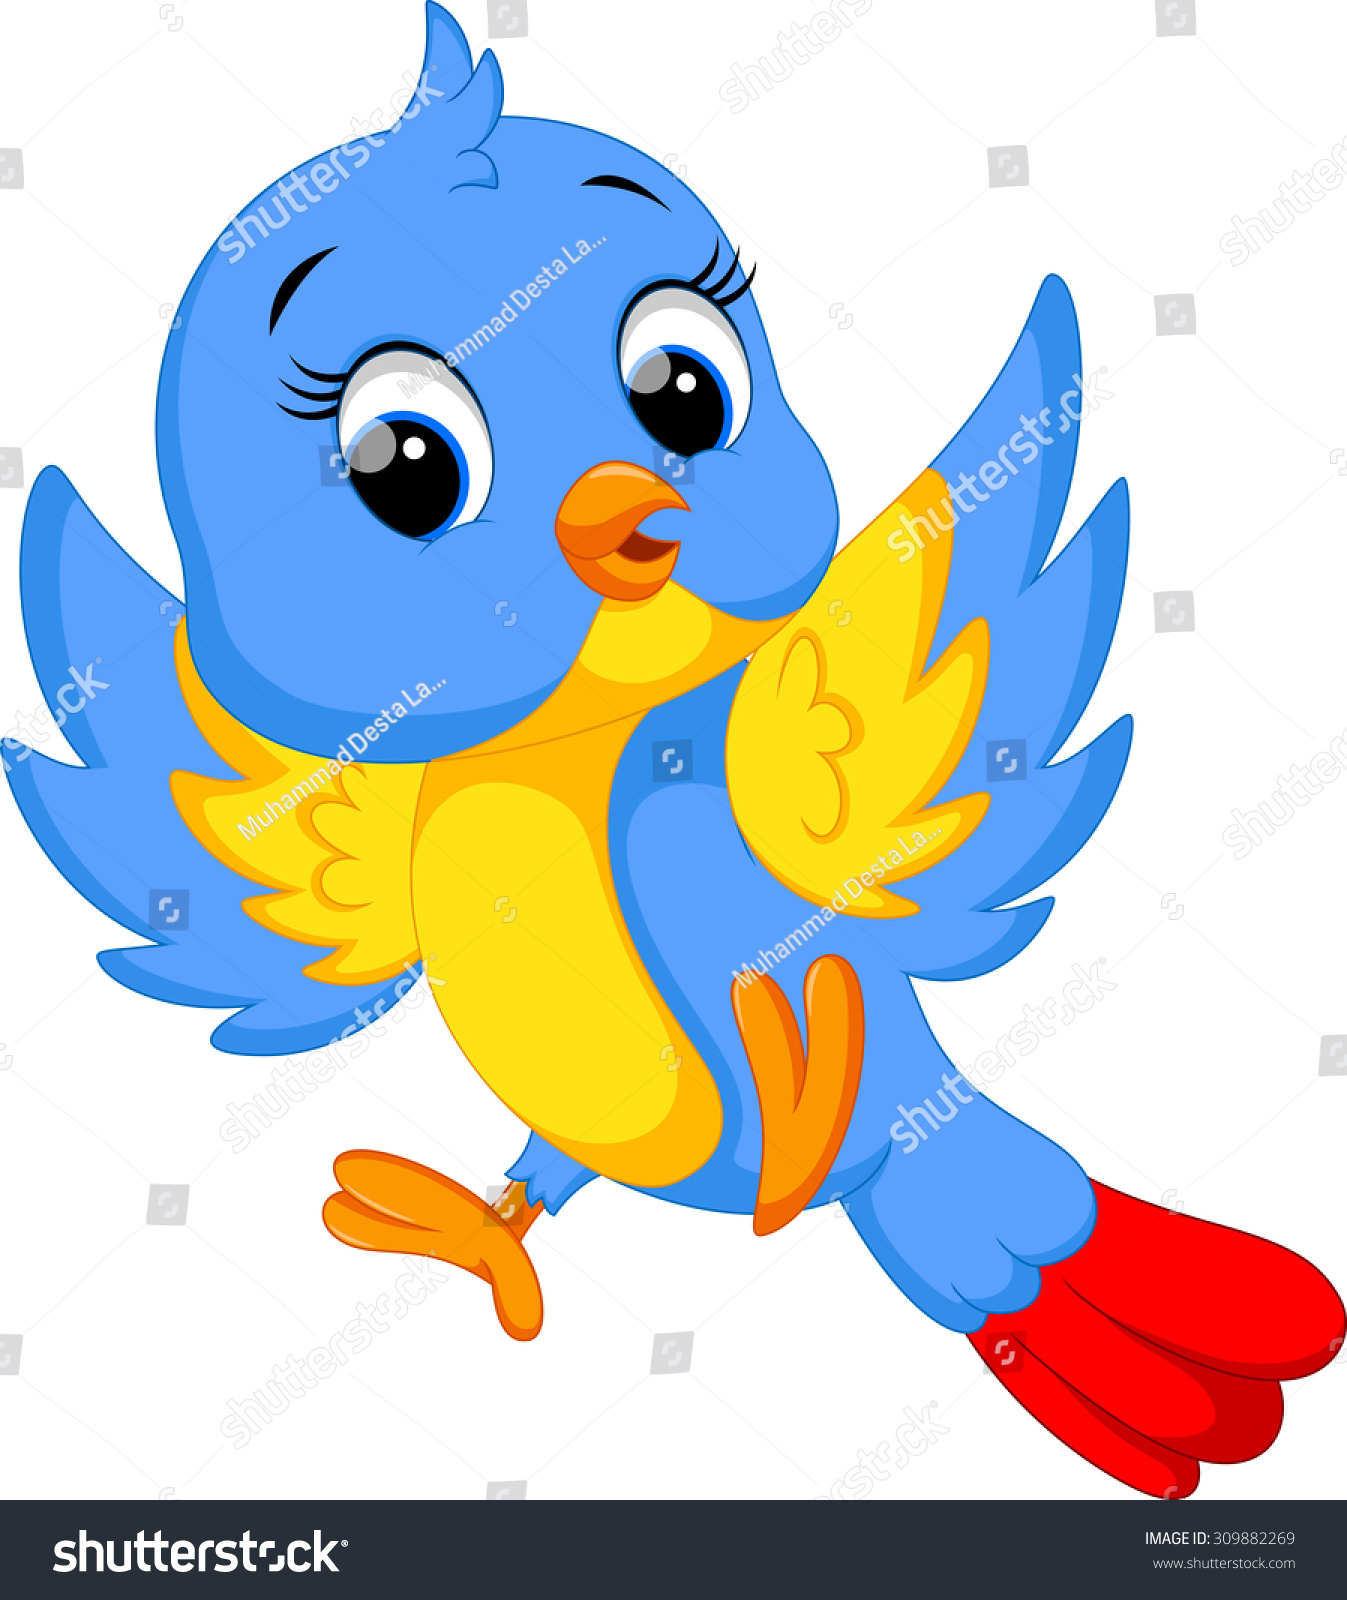 Cute Bird Cartoon เวกเตอร์สต็อก (ปลอดค่าลิขสิทธิ์) 309882269 Shutterstock